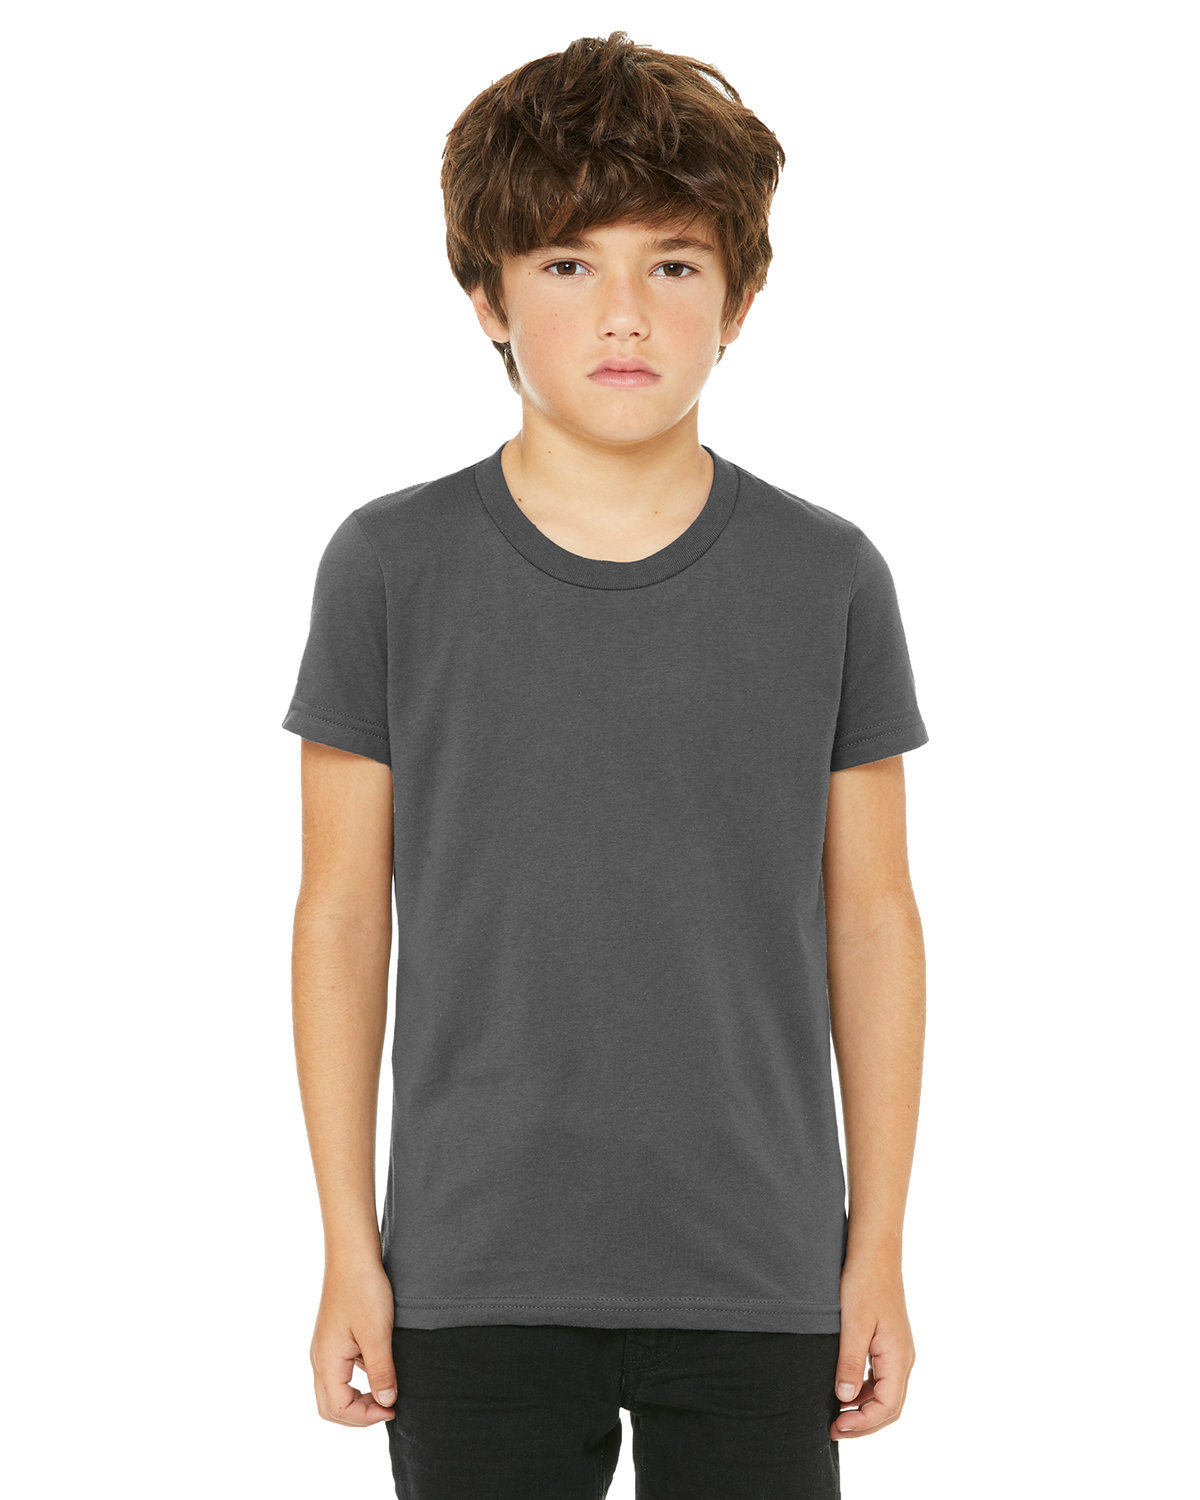 Bella + Canvas Youth Jersey T-Shirt asphalt 